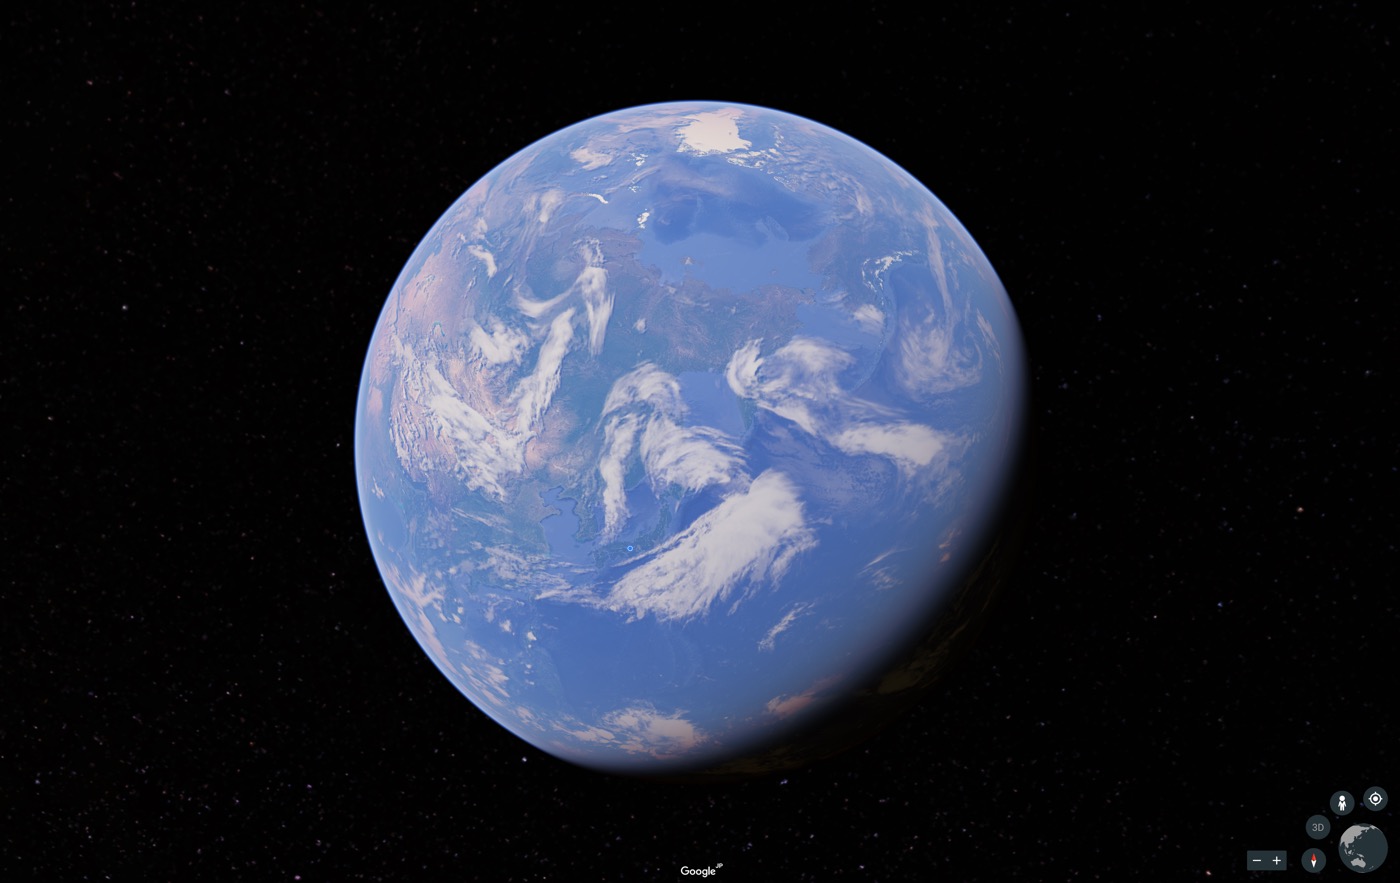 ｢Google Earth｣のウェブ版がFirefox・Opera・Microsoft Edgeでも利用可能に − 将来的にはSafariもサポートへ